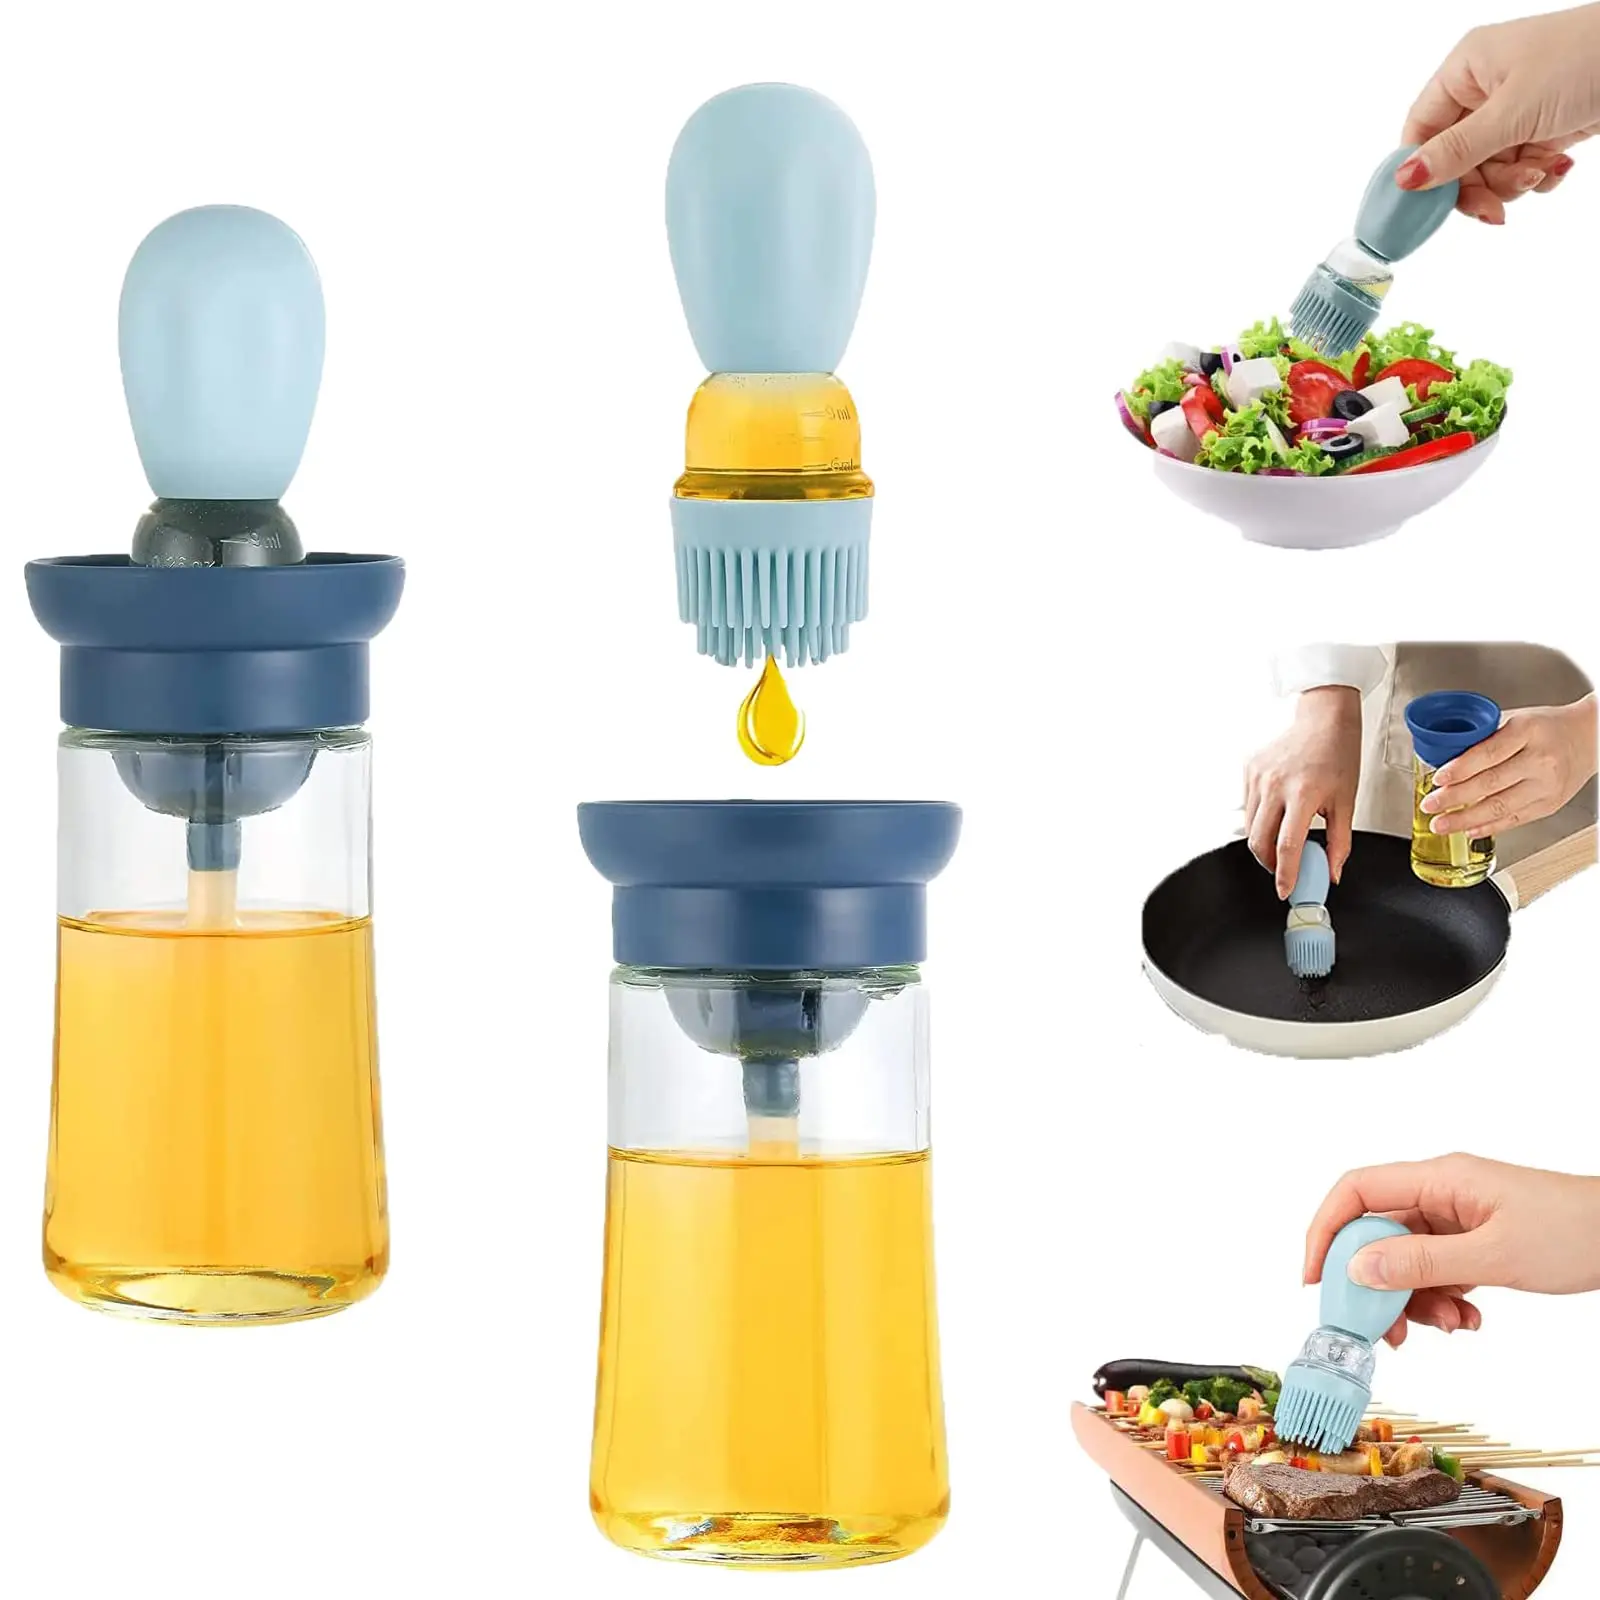 https://ae01.alicdn.com/kf/S4683410b76944e7899a844231d7e3a58D/Oil-Spray-Bottle-With-Silicone-Brush-2-In-1-Dropper-Measuring-Oil-Dispenser-Bottle-For-Kitchen.jpg